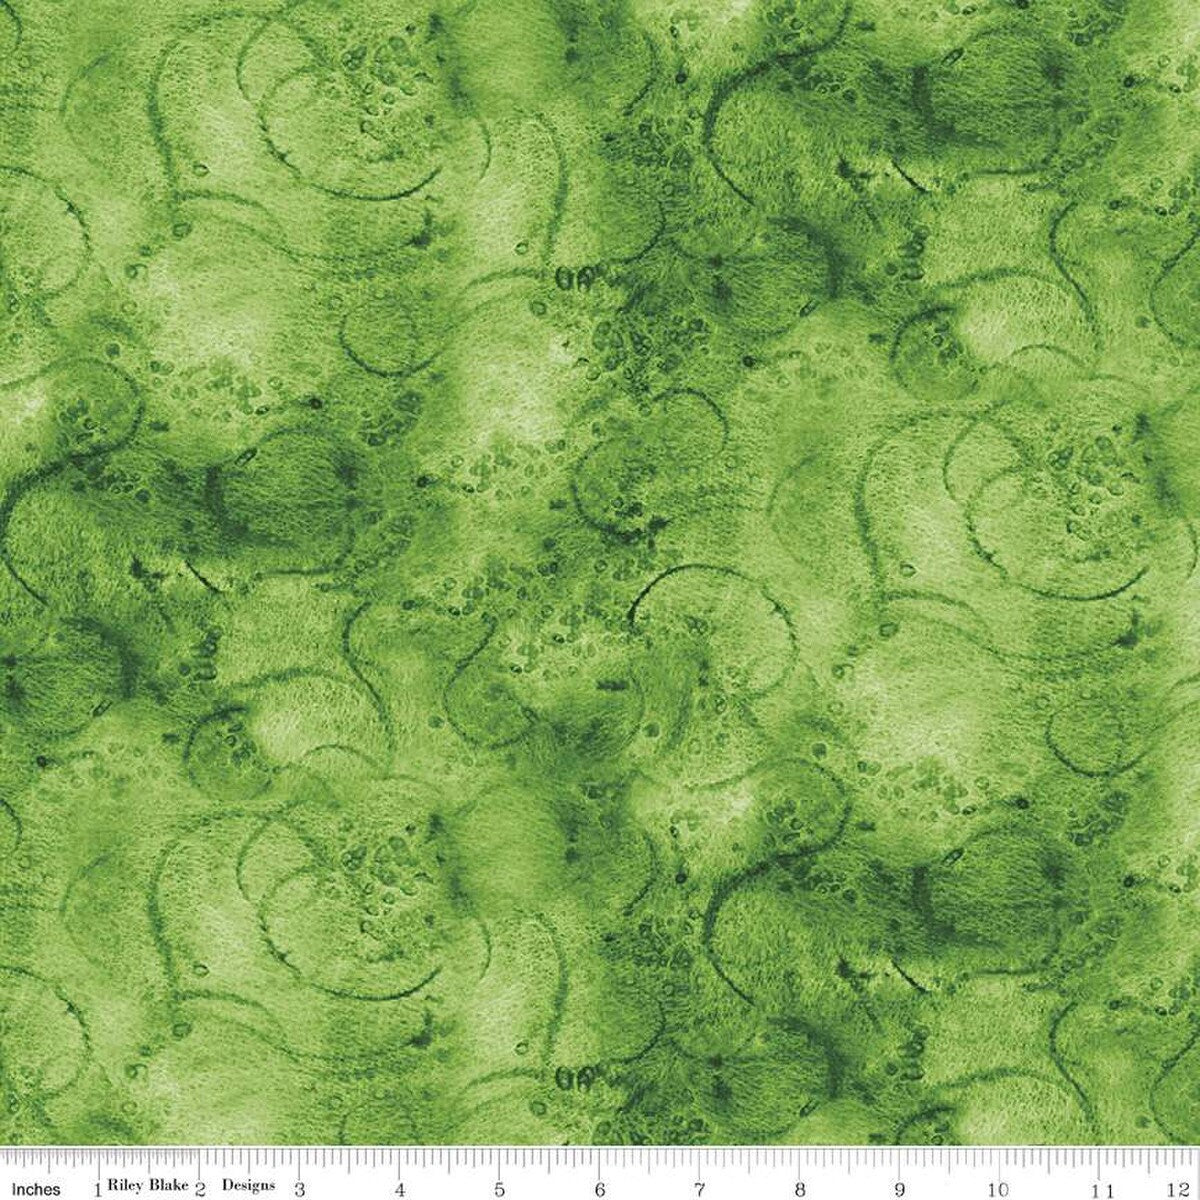 Painter's Watercolor Swirl Medium Green Fabric - Riley Blake Designs C680-MEDGREEN, Green Blender Fabric, Green Swirls Fabric by the Yard